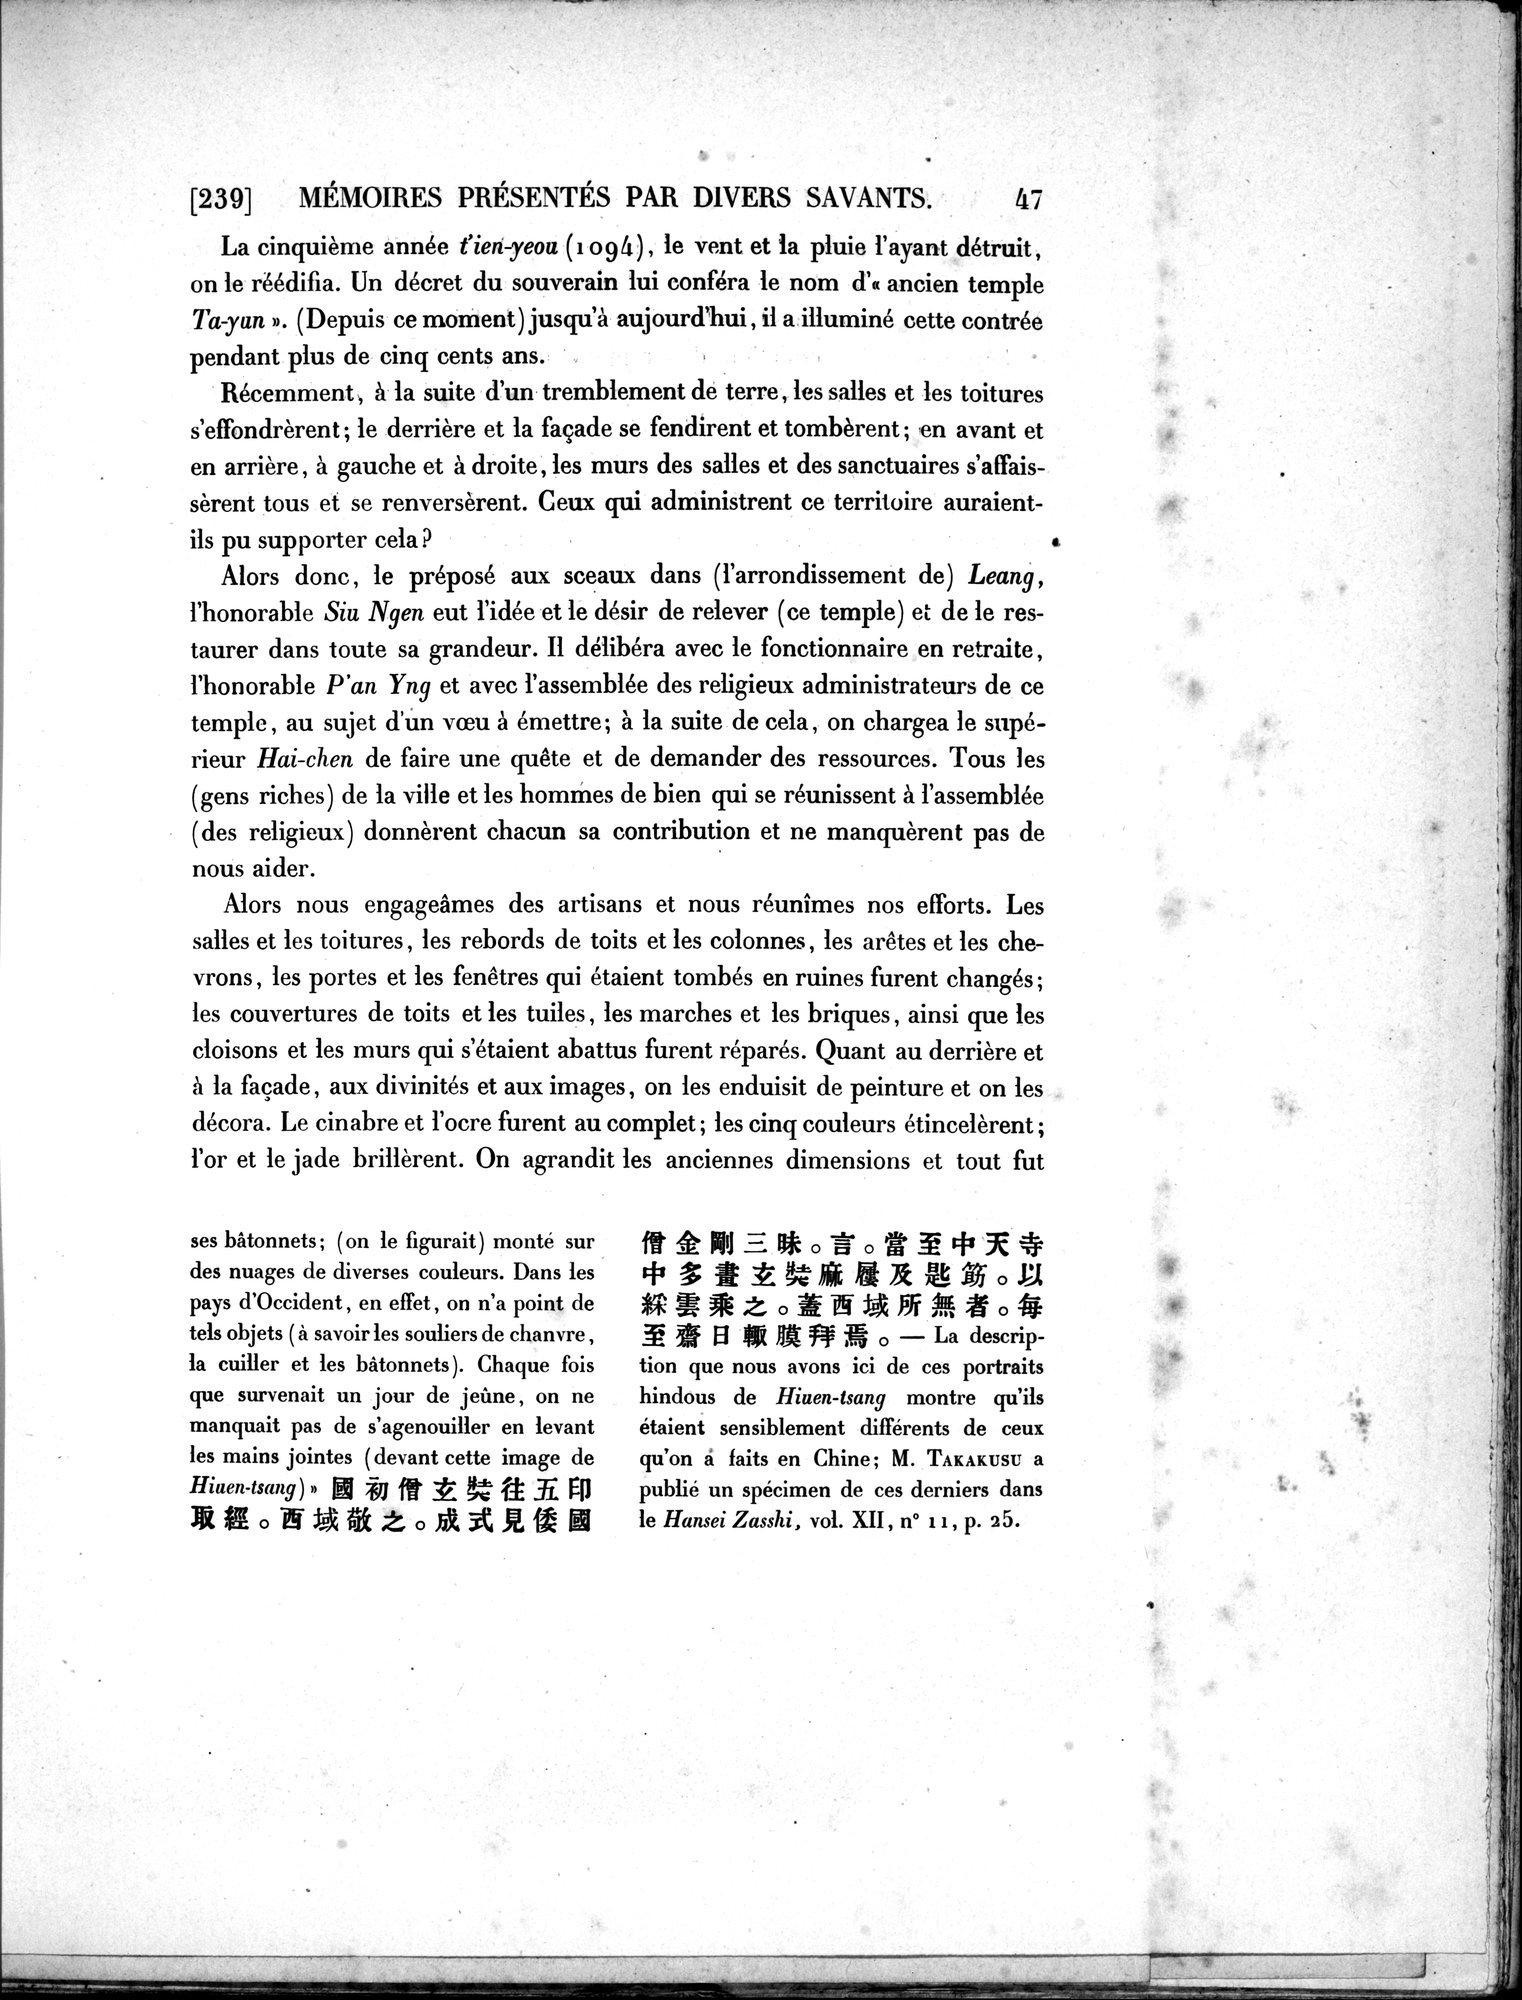 Dix Inscriptions Chinoises de l'Asie Centrale : vol.1 / Page 63 (Grayscale High Resolution Image)